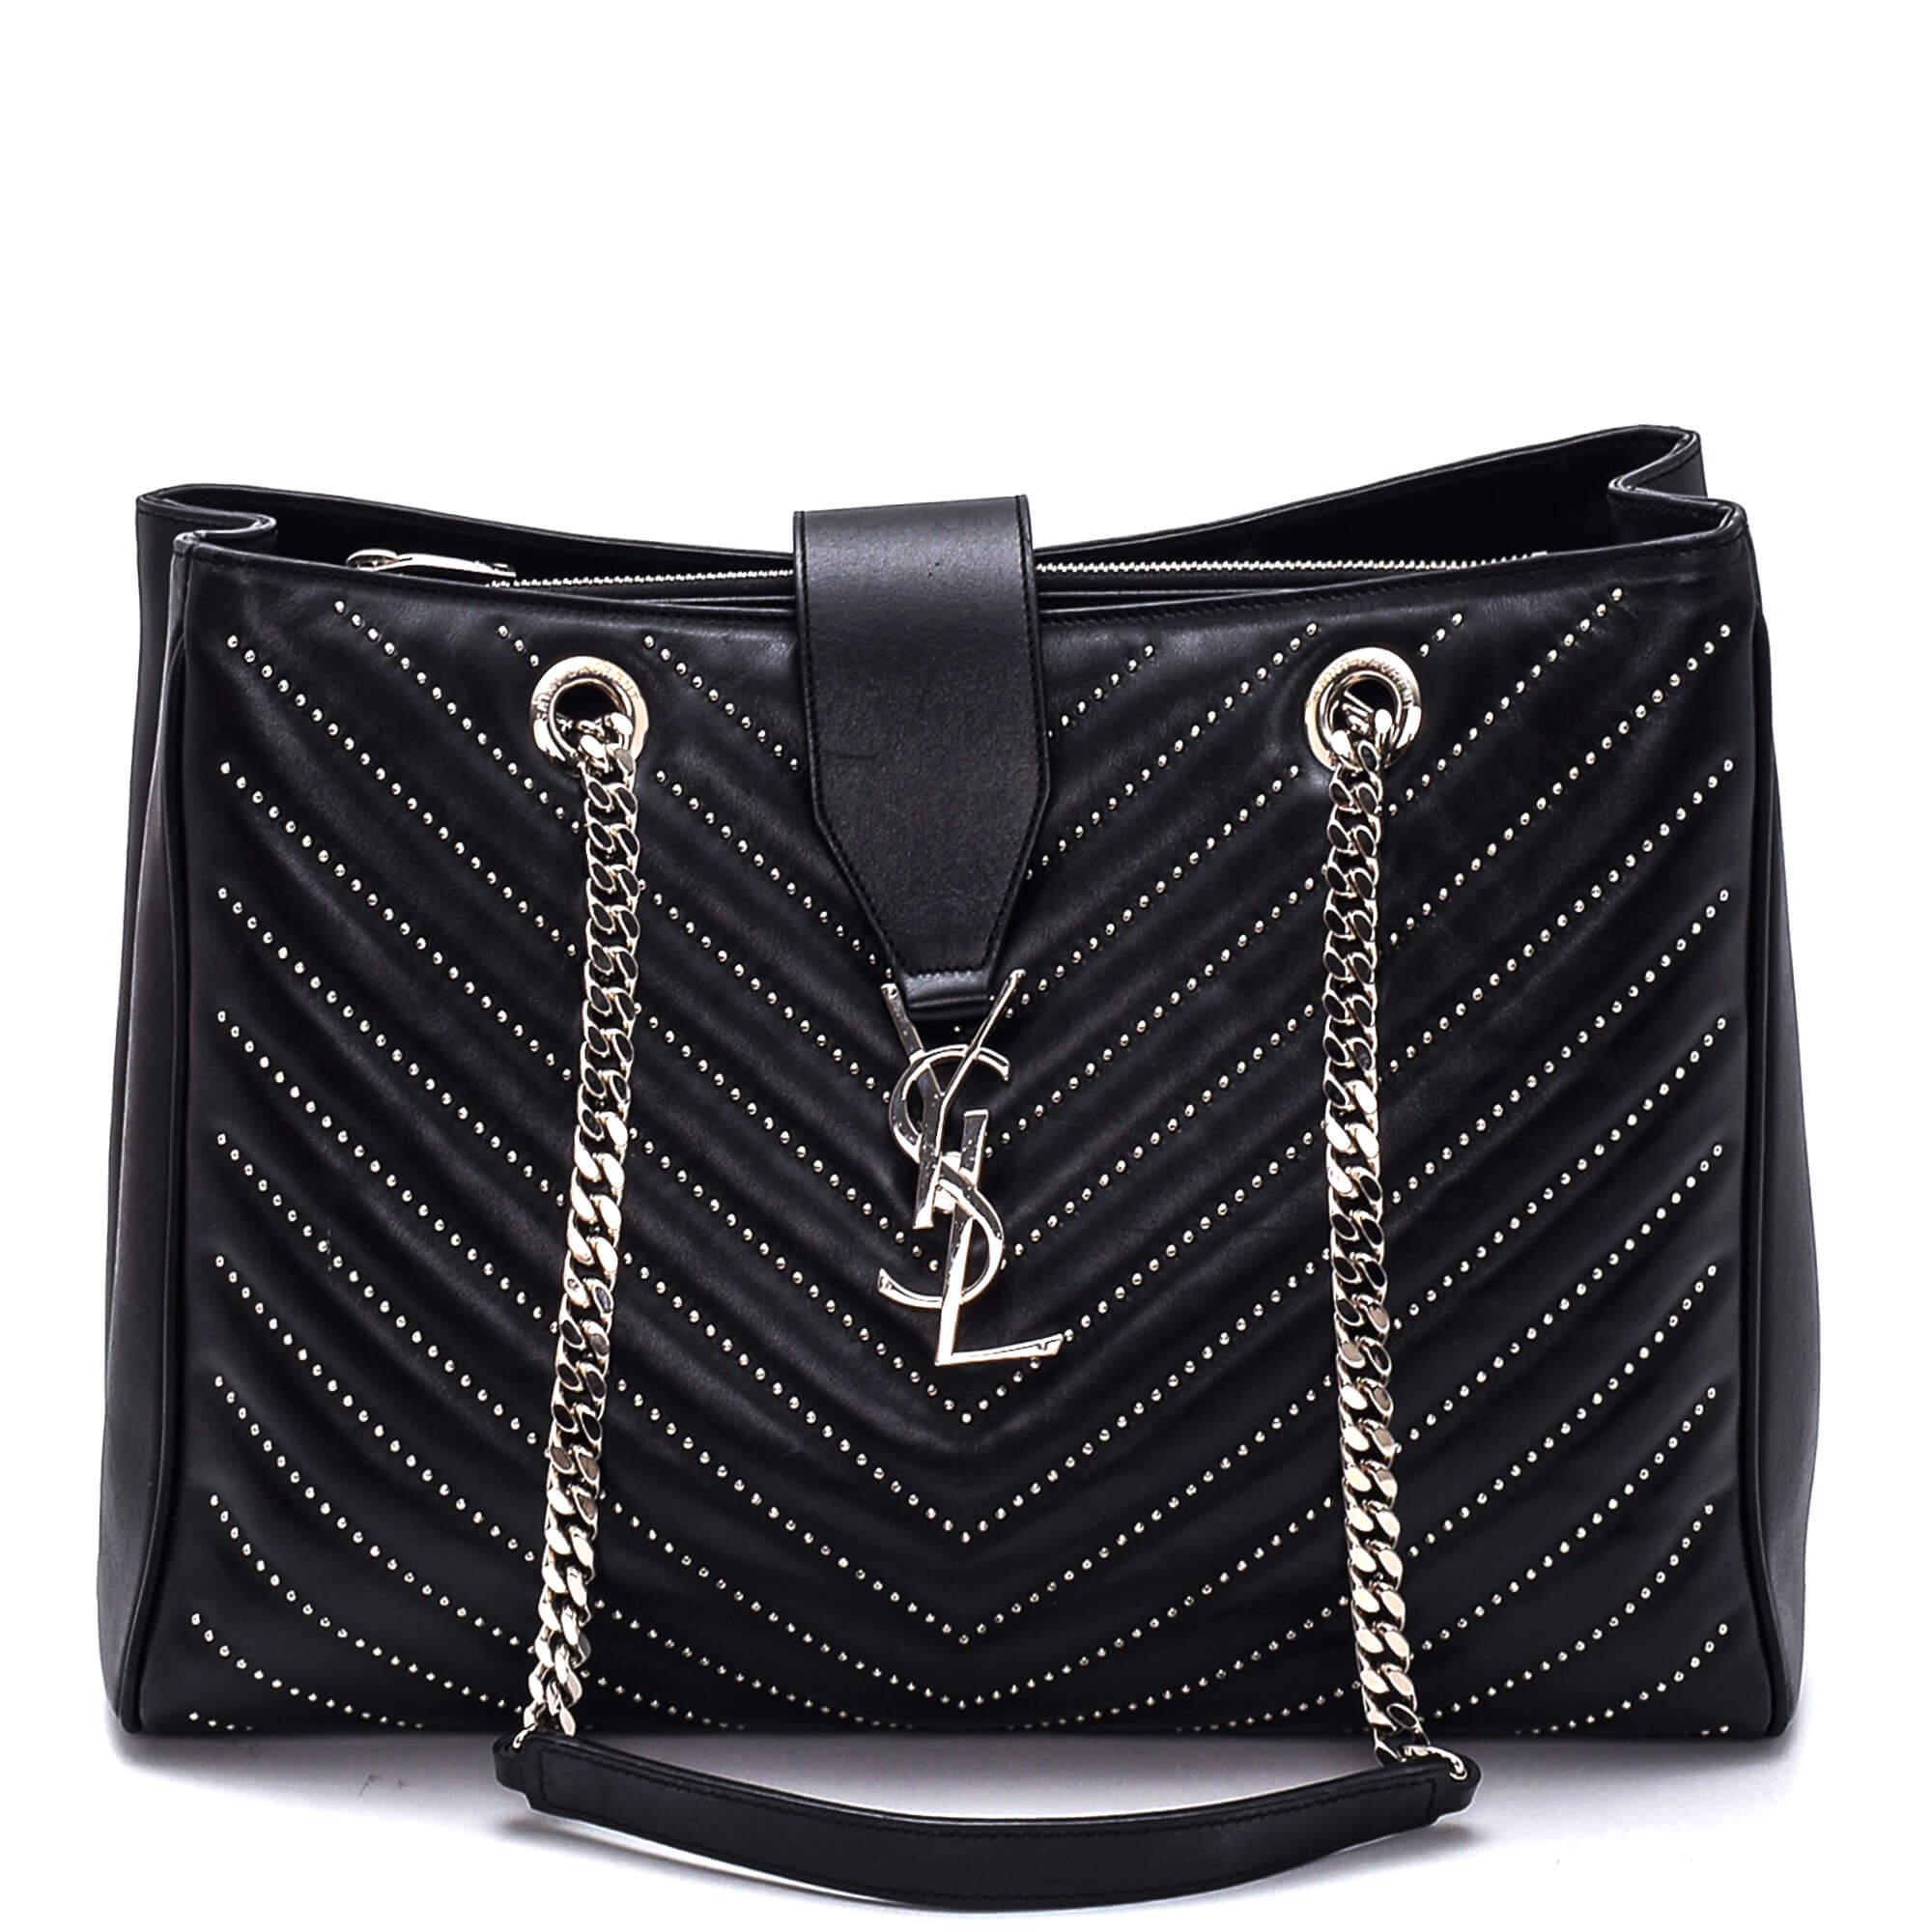 Yves Saint Laurent - Black Studded Chevron Leather Monogram Tote Bag